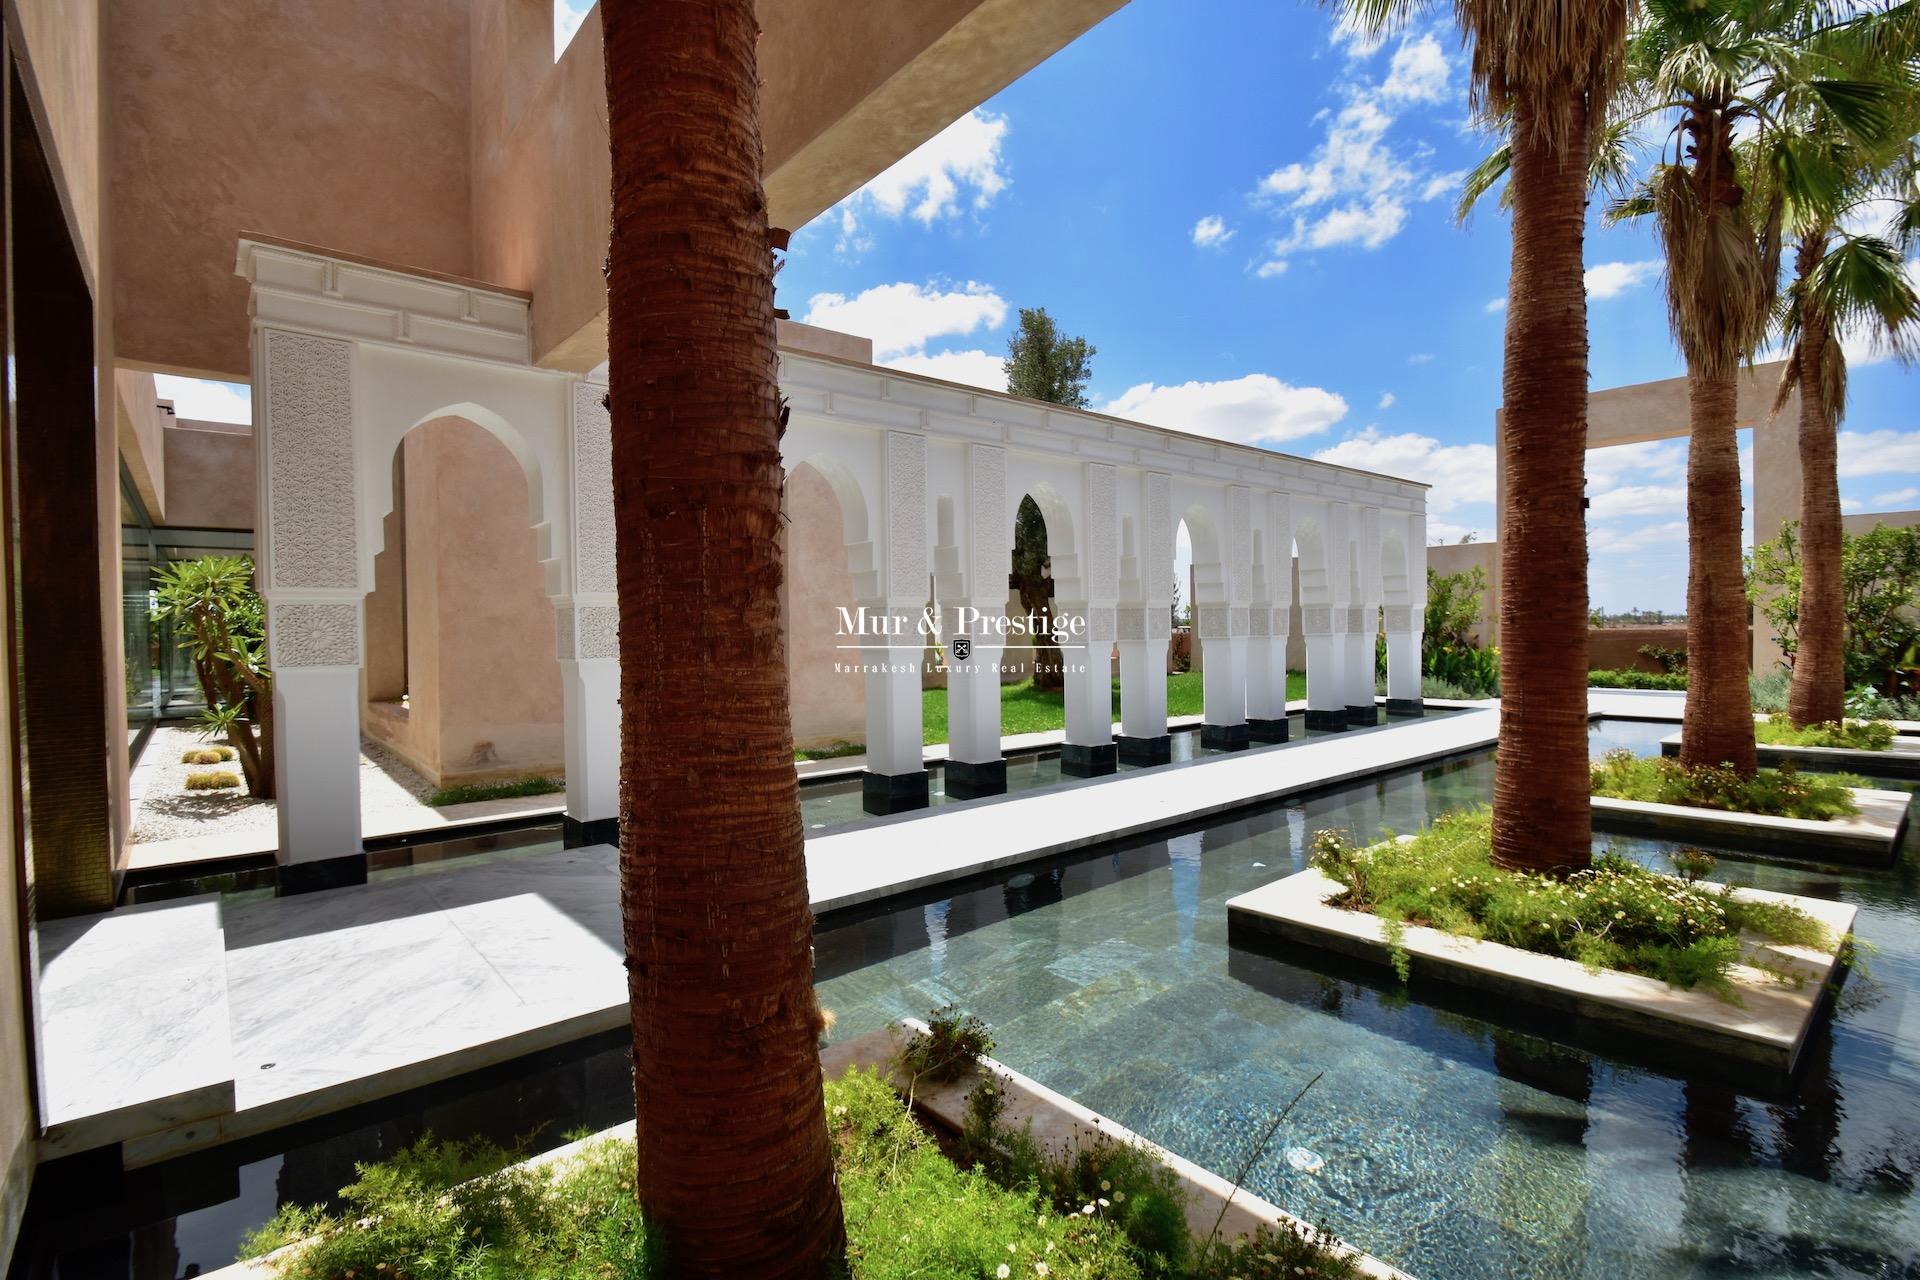 Vente villa de luxe à Marrakech